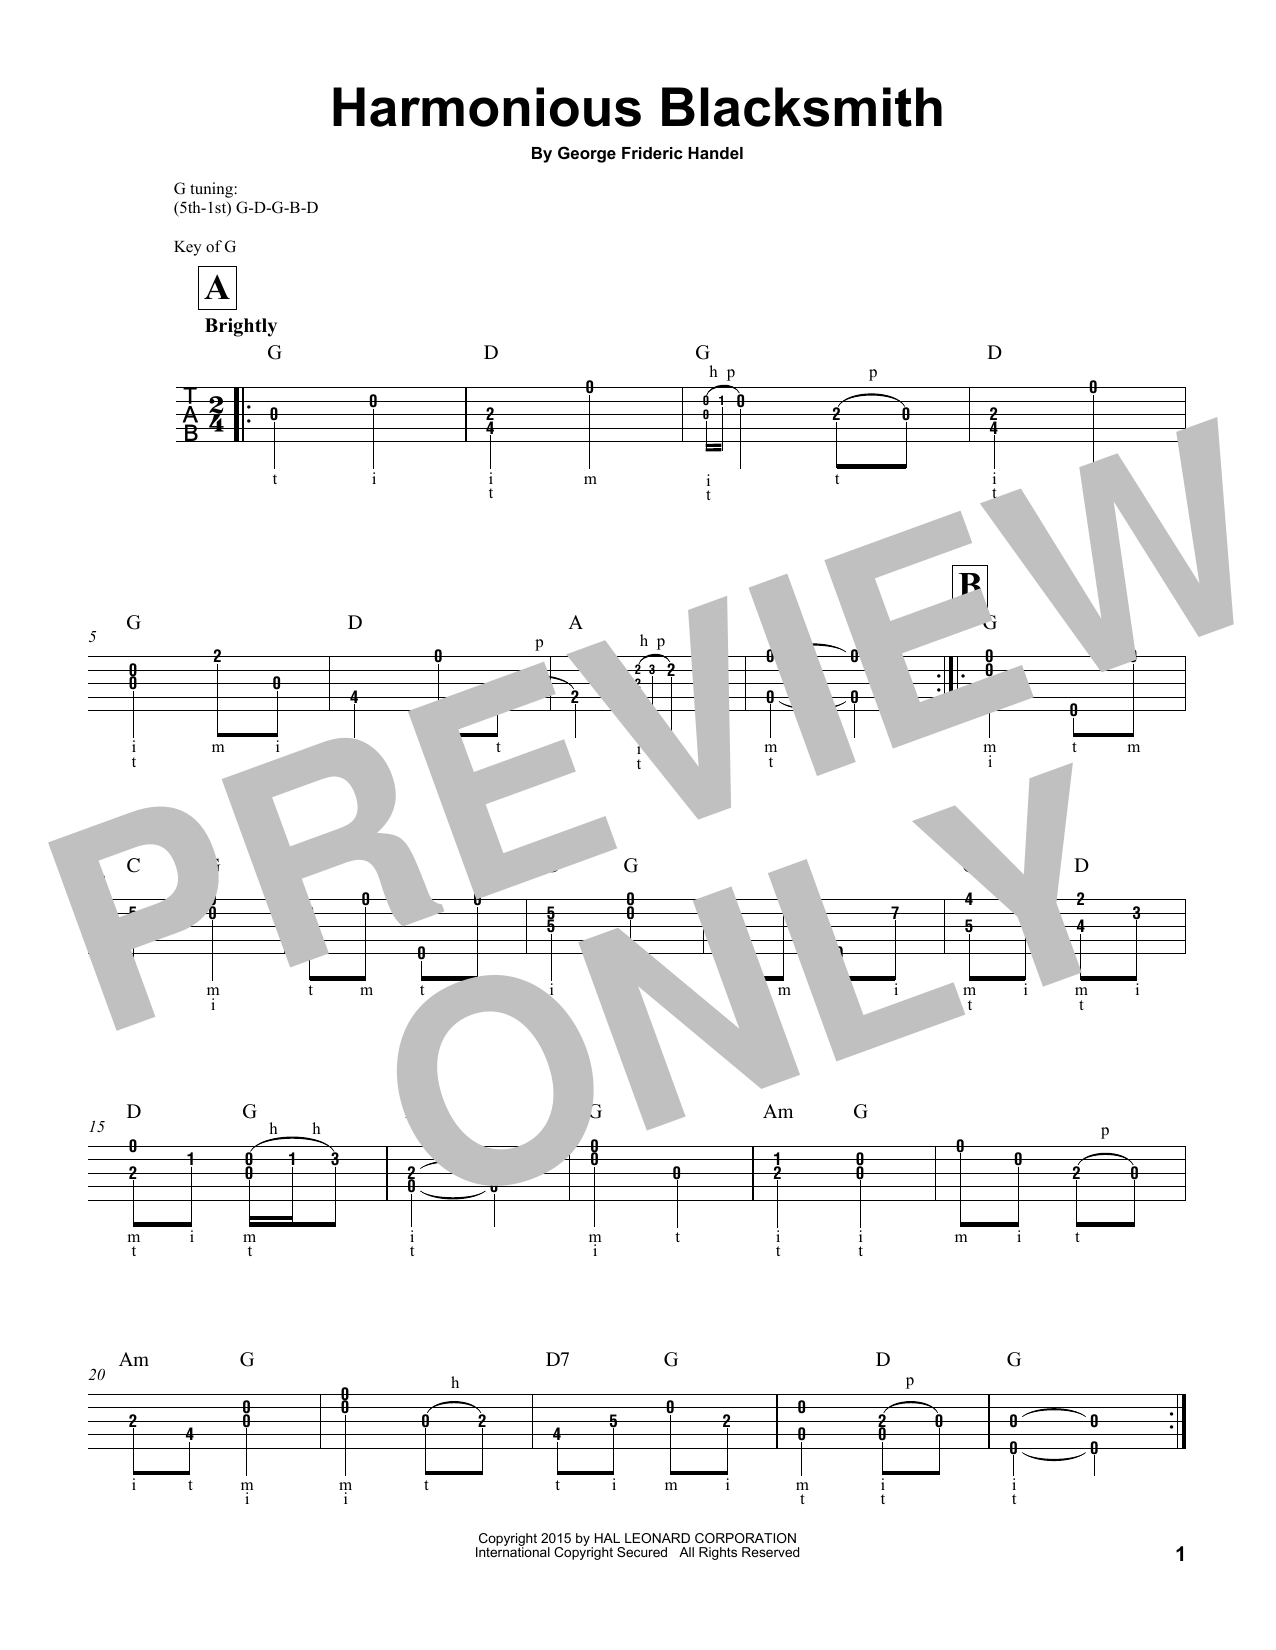 George Frideric Handel Harmonious Blacksmith Sheet Music Notes & Chords for Violin - Download or Print PDF